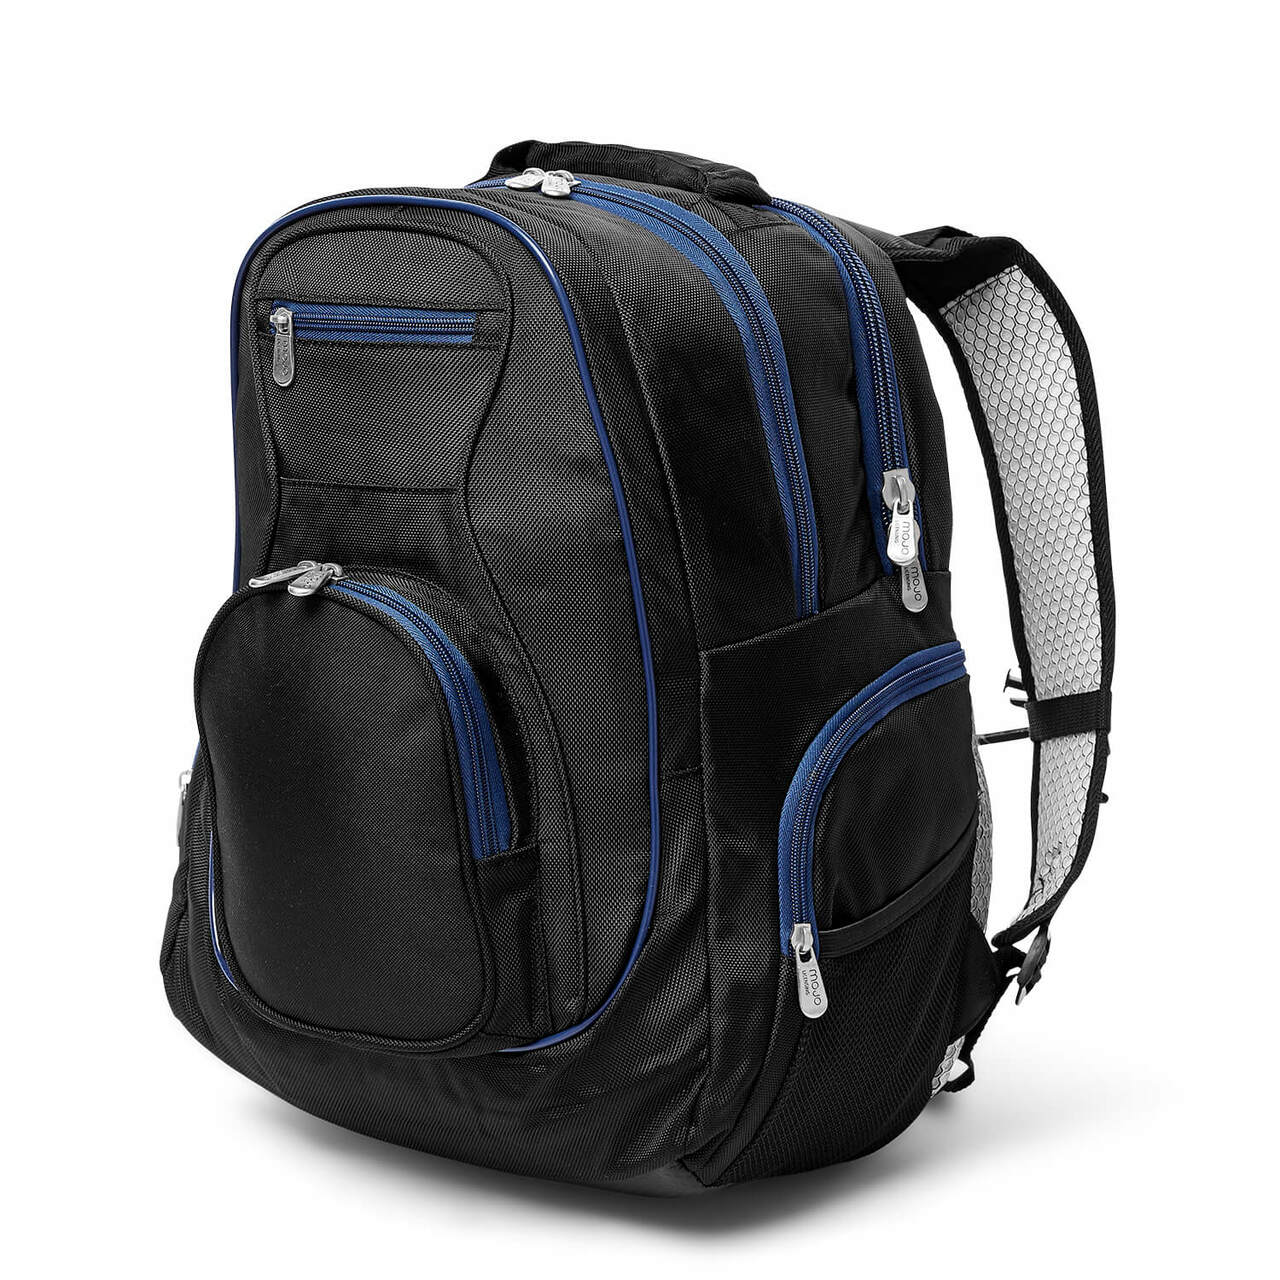 Bears Backpack | California Bears Laptop Backpack